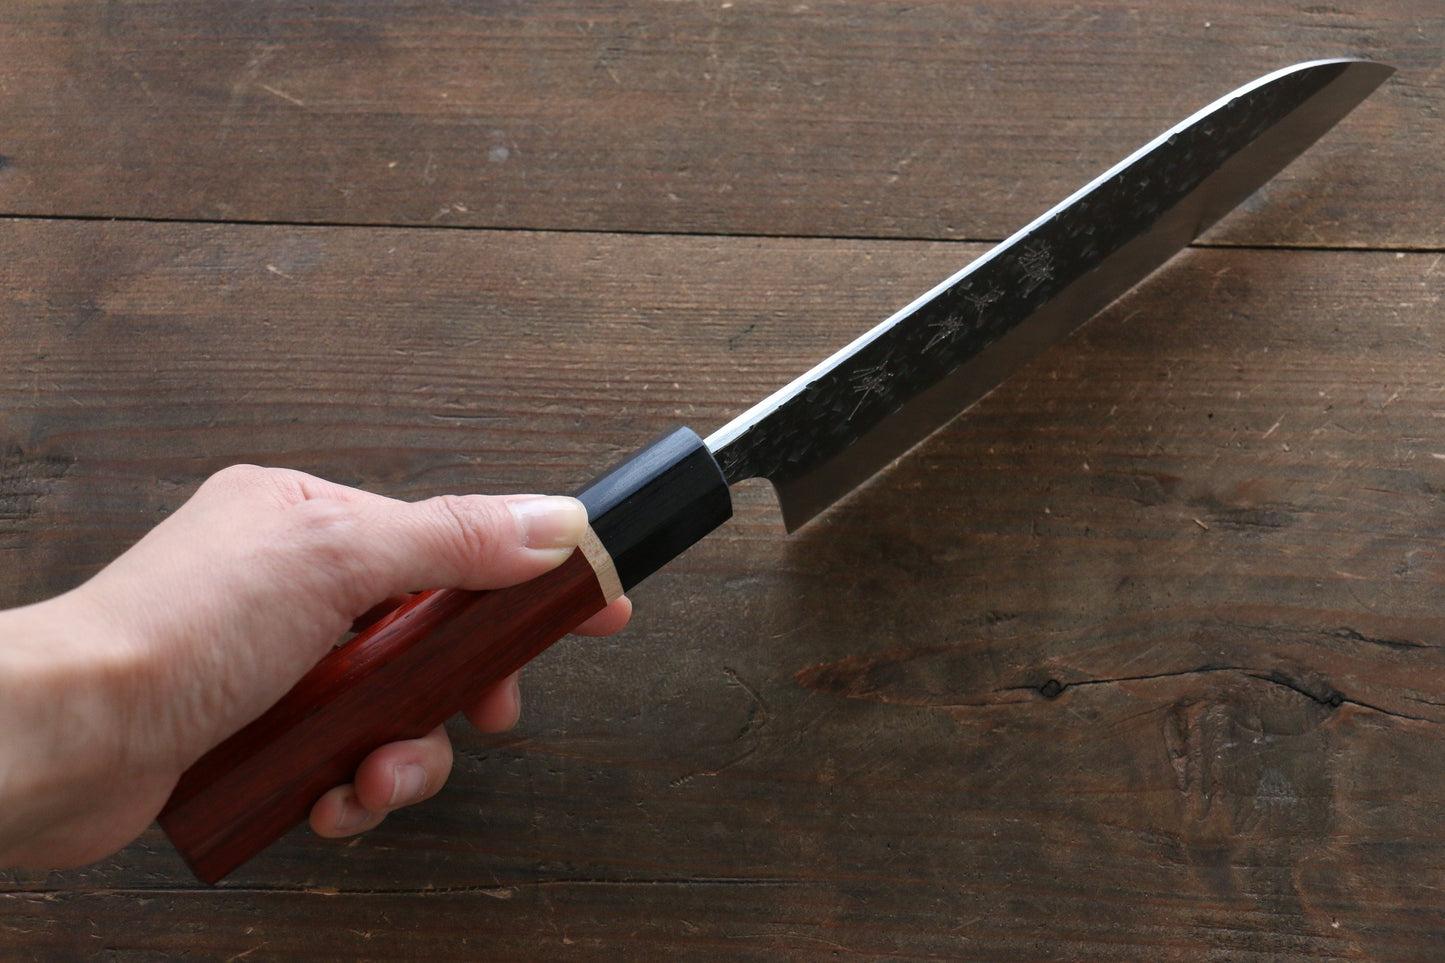 Yu Kurosaki Blue Super Clad Hammered Kurouchi Santoku Japanese Chef Knife 170mm with Padoauk handle - Japanny - Best Japanese Knife